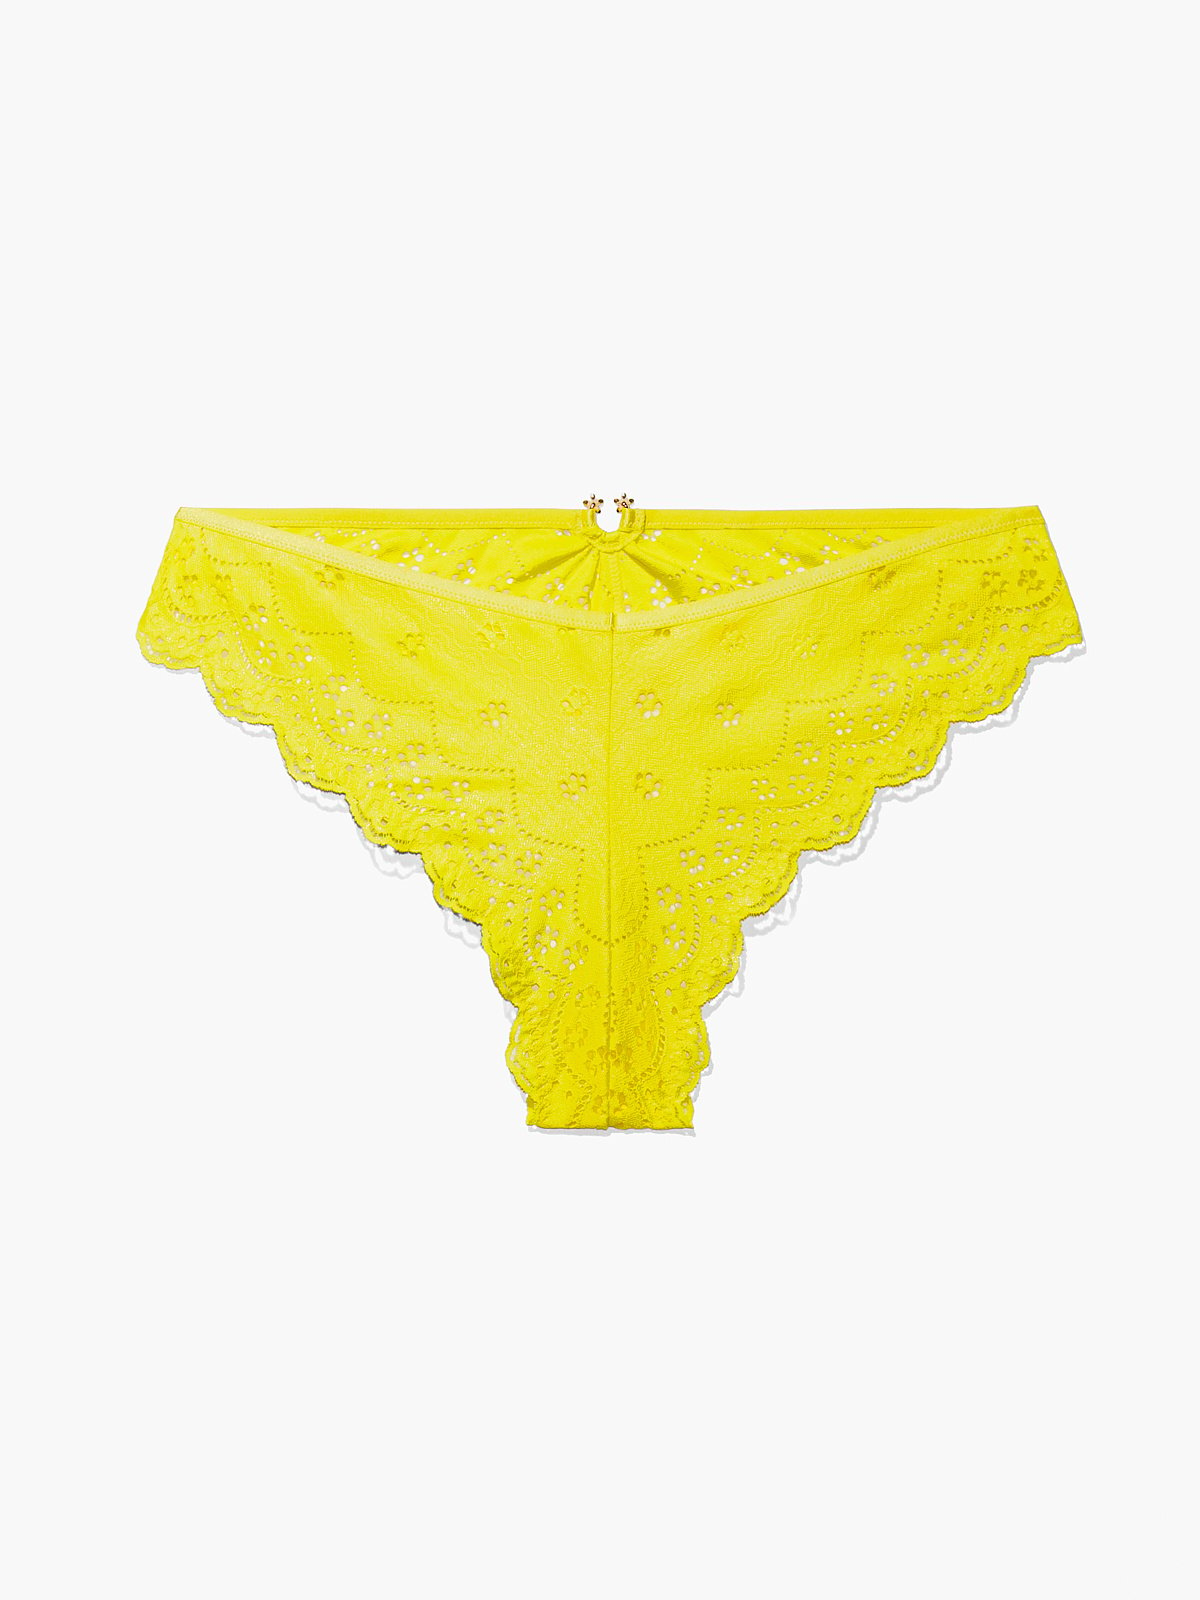 ❗️38b yellow bra and XL thong panty set